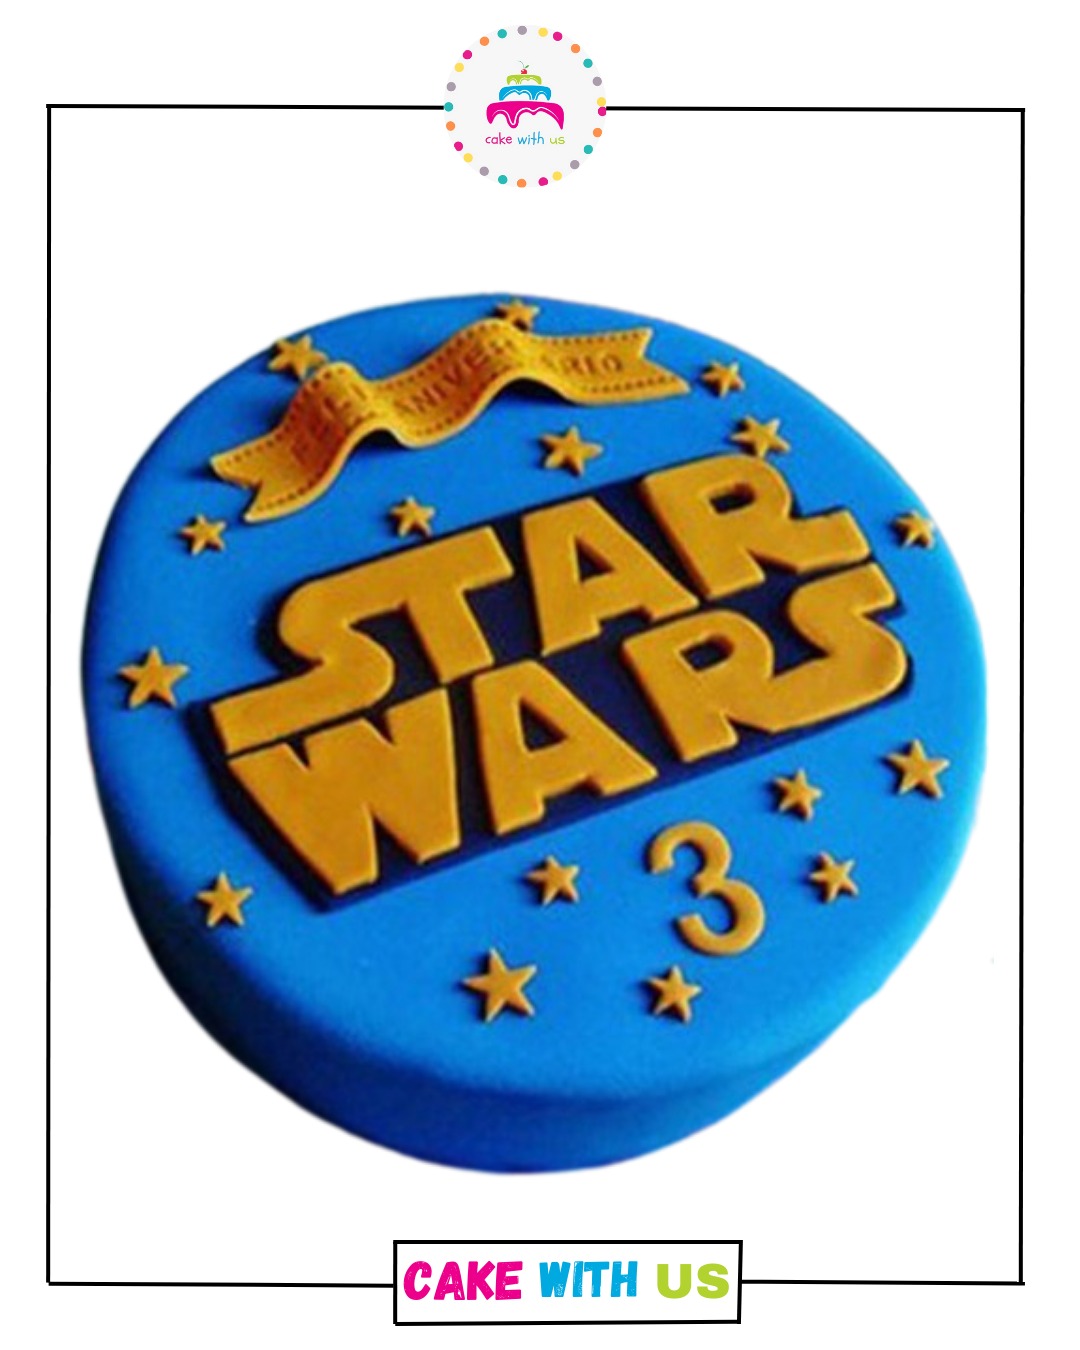 classic blue & orange star wars birthday cake